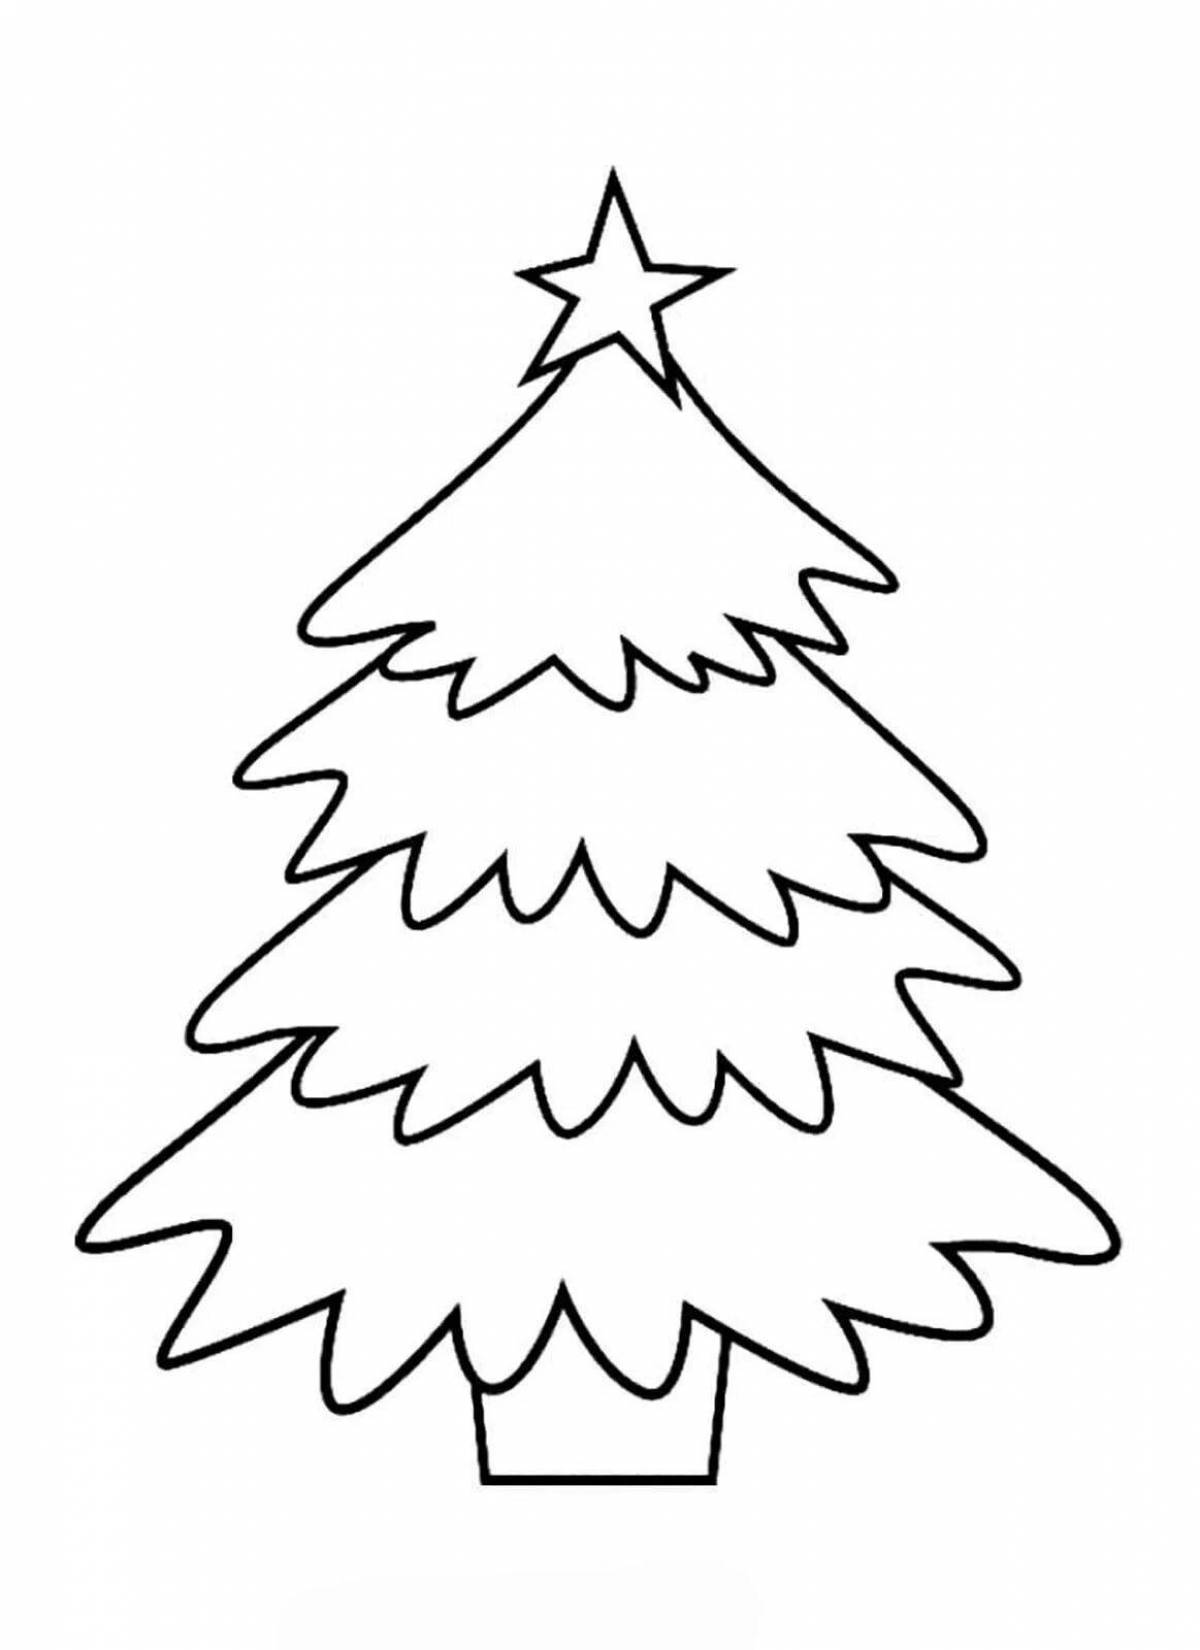 Christmas tree creative stencil coloring